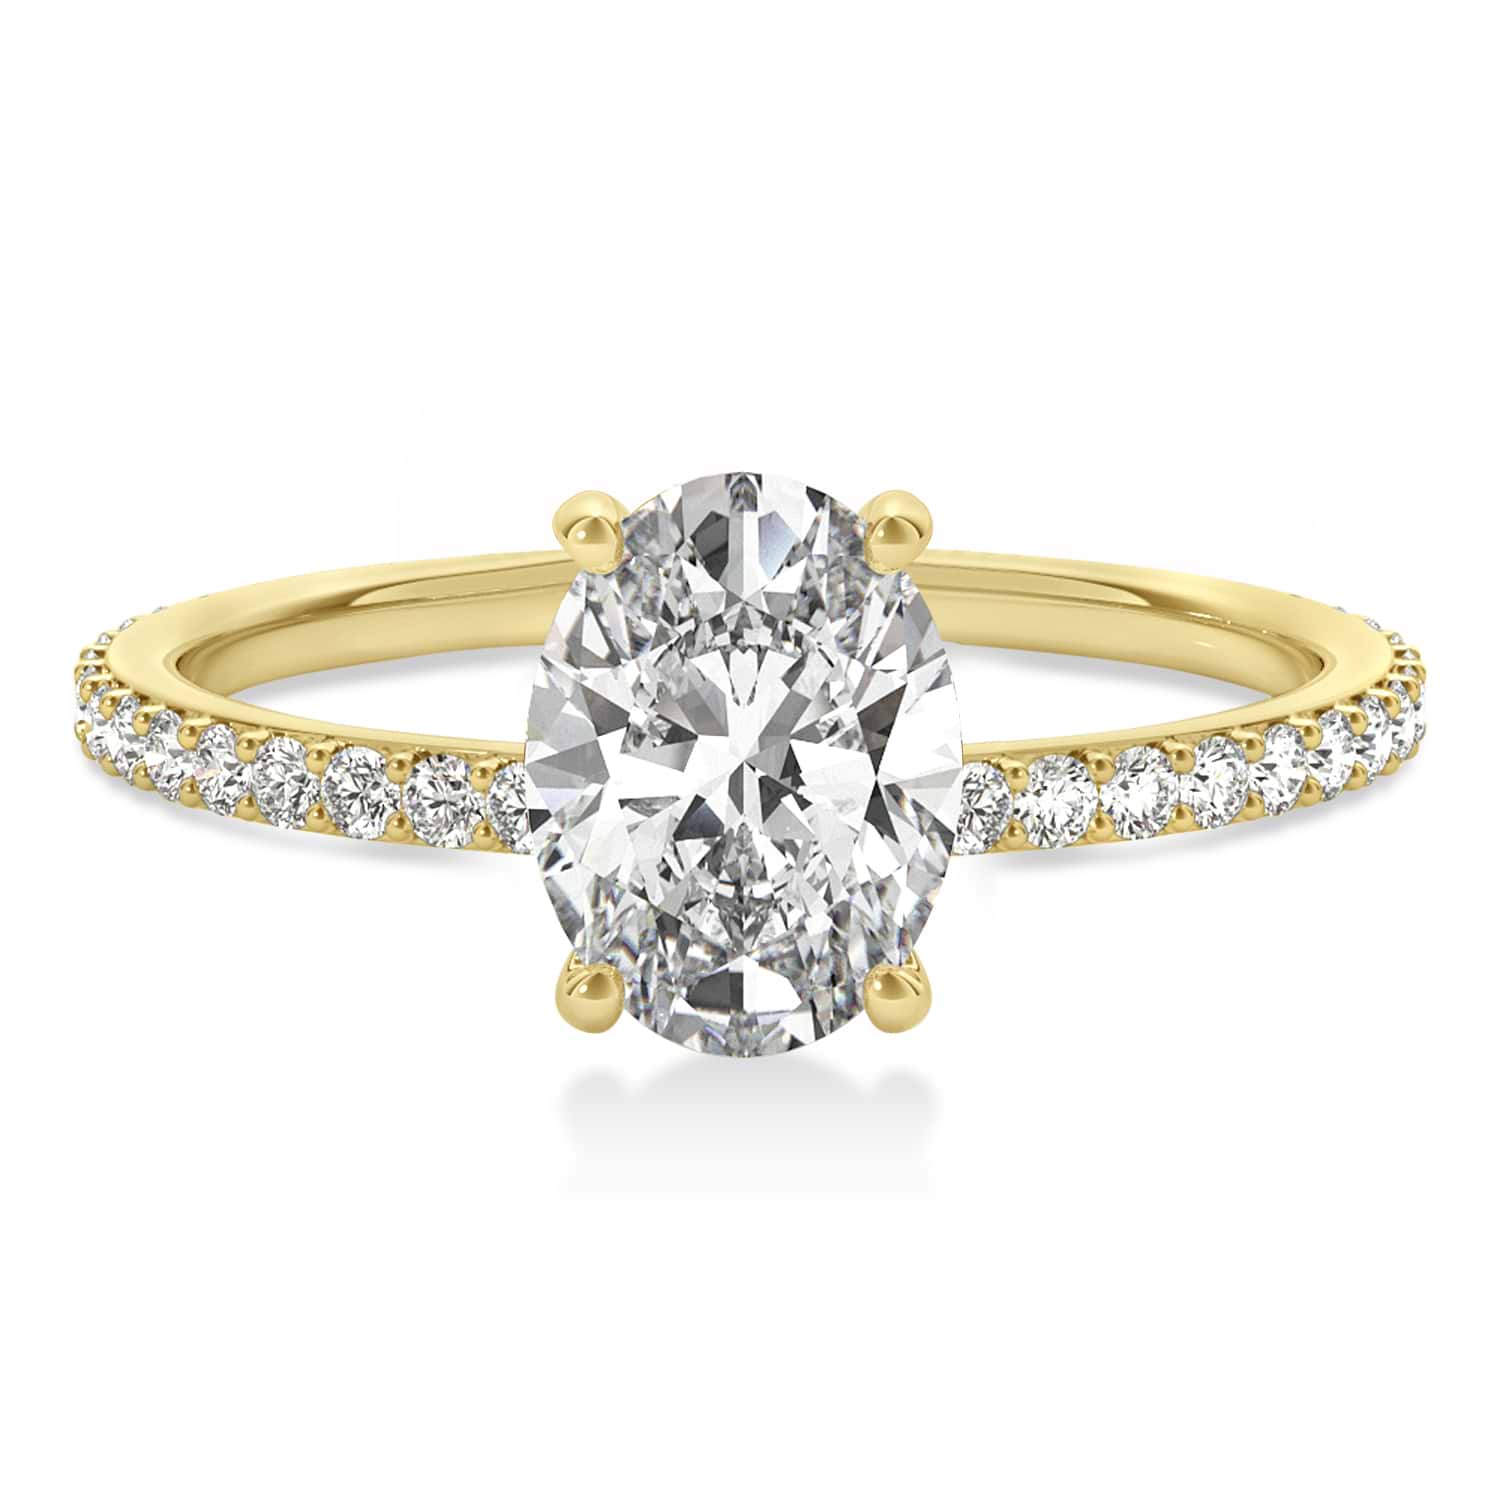 Oval Diamond Hidden Halo Engagement Ring 18k Yellow Gold (0.76ct)